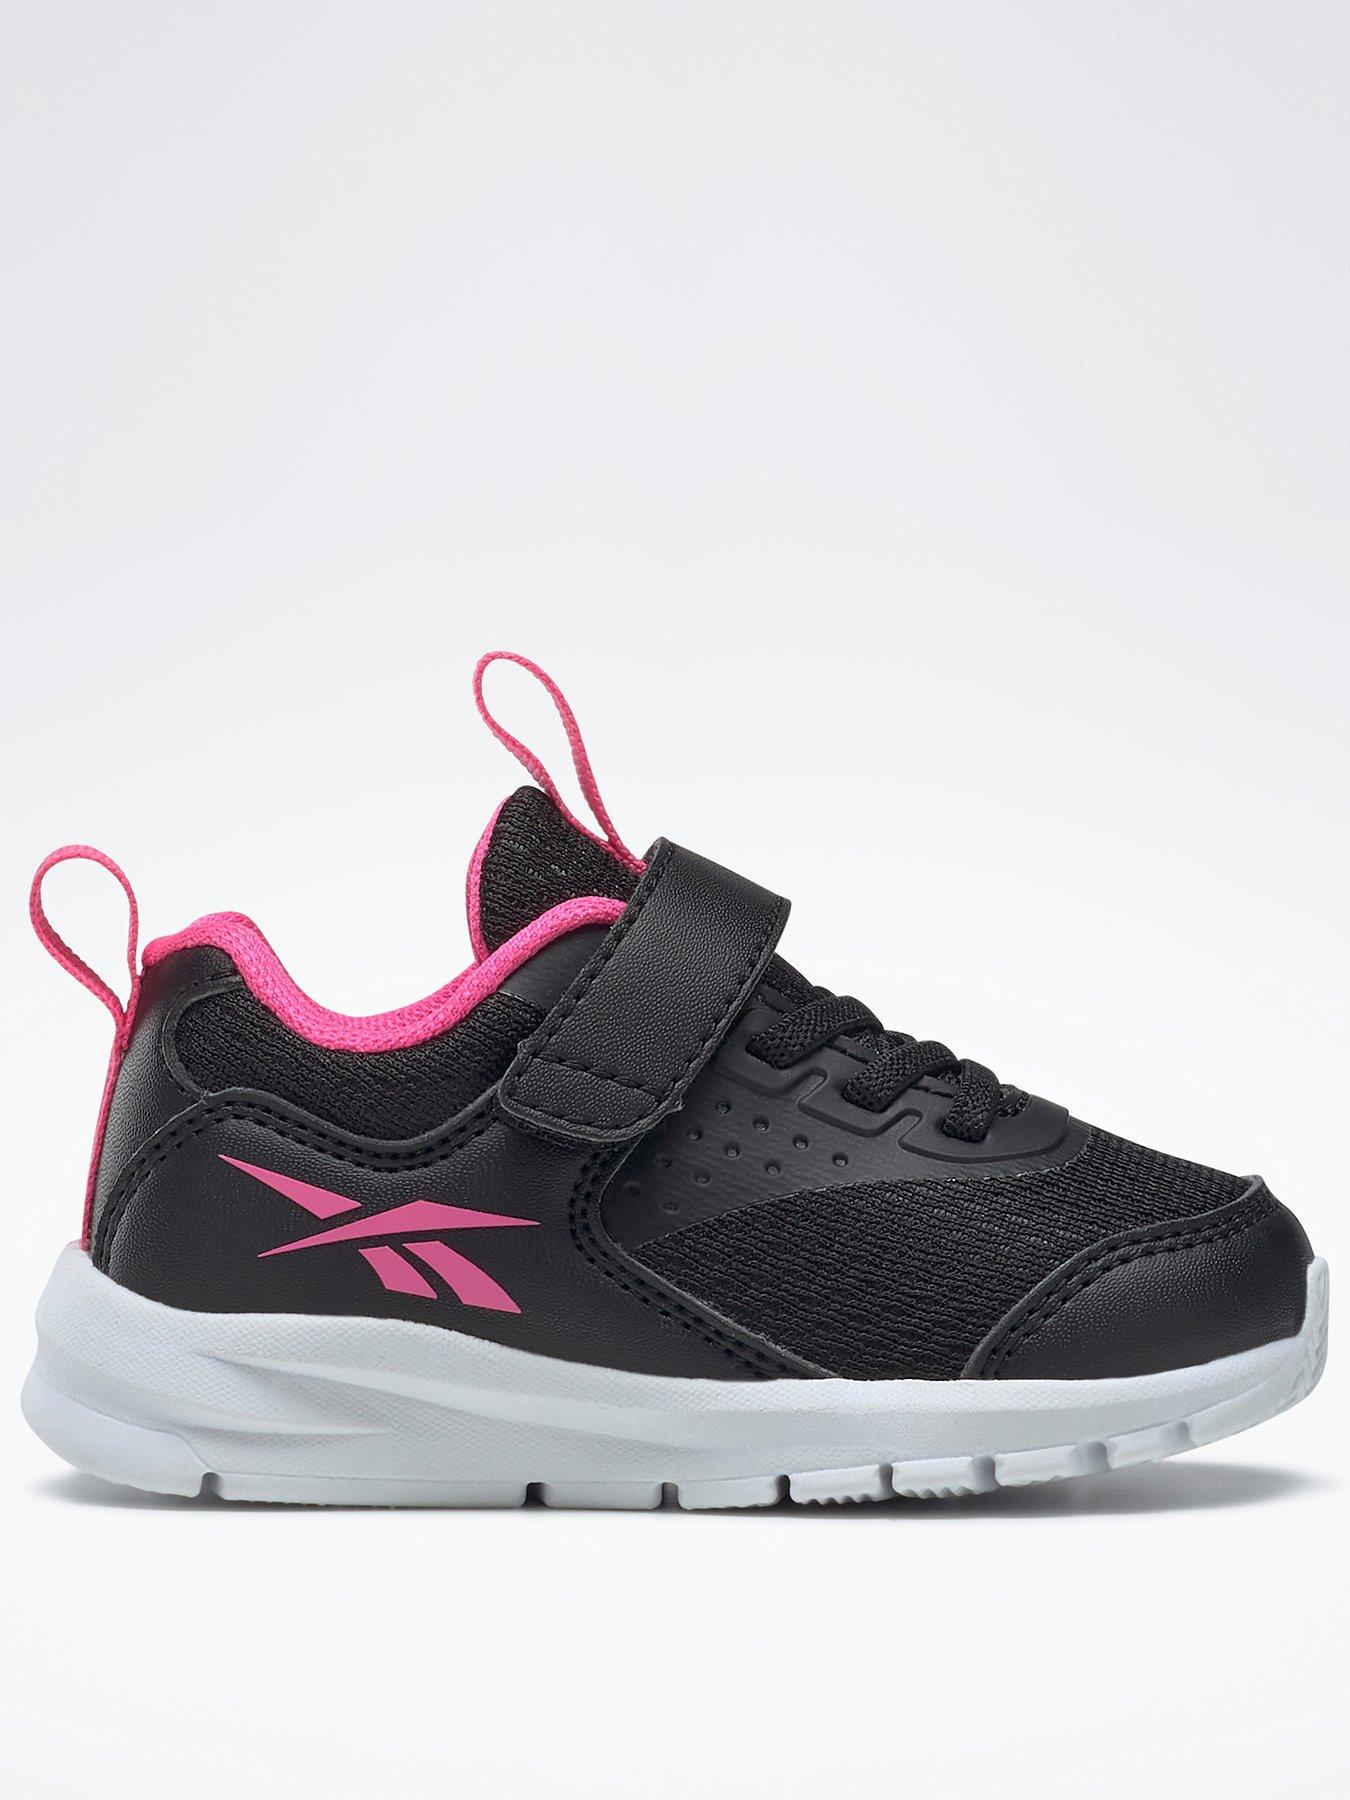 Reebok Kids Shoes Training Running Rush Runner Sports Girls Gym Fashion DV8731 